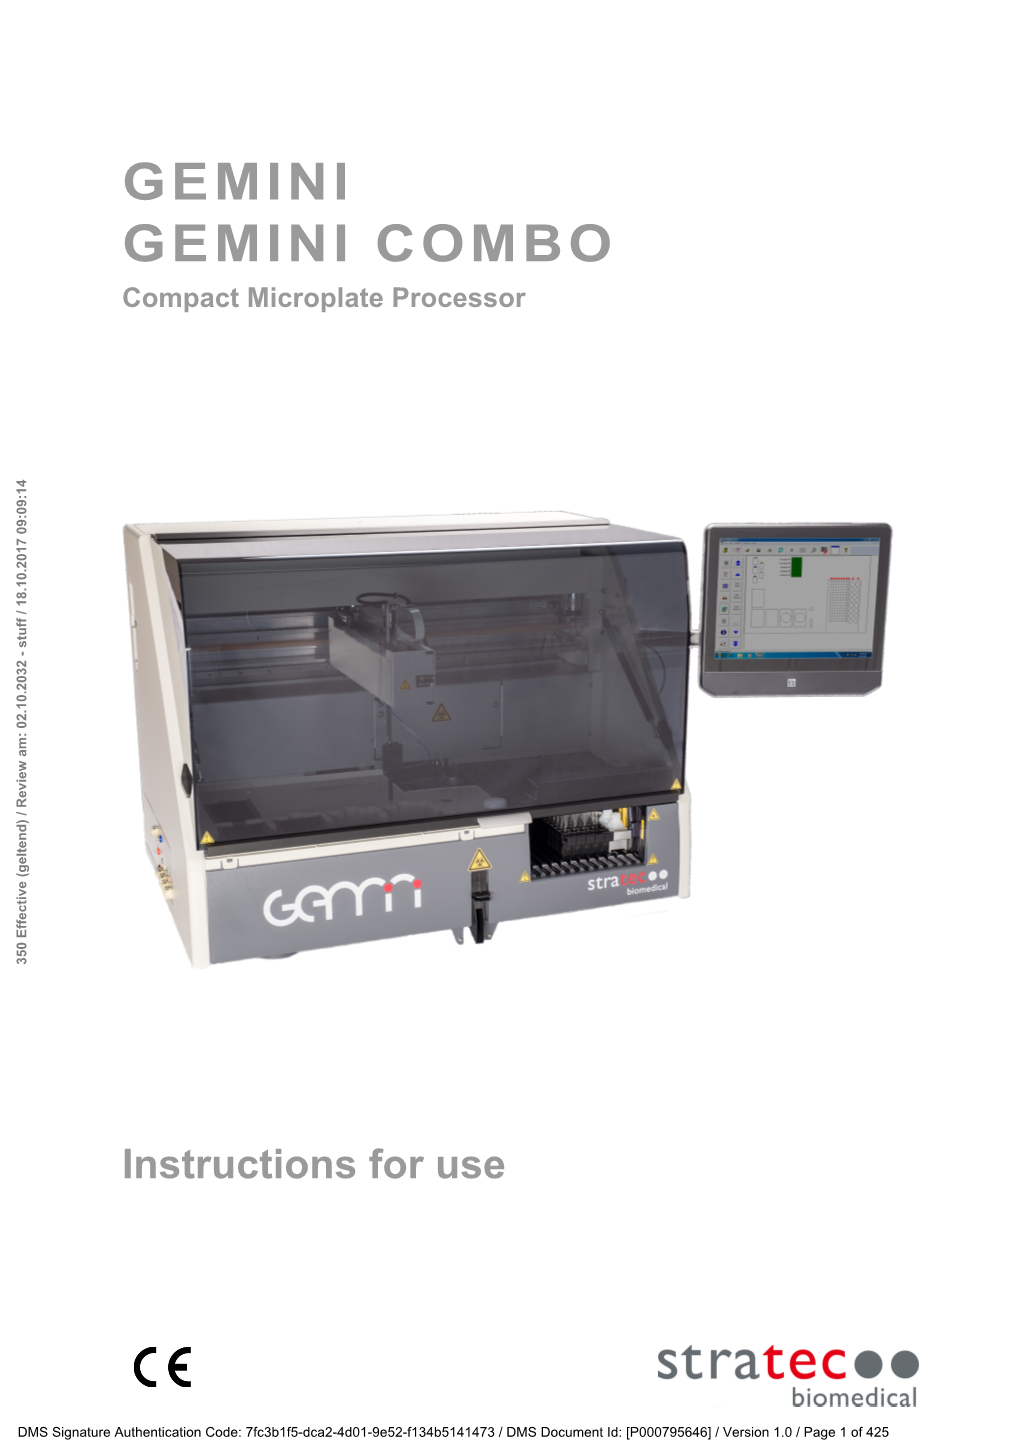 GEMINI / GEMINI COMBO: User Software from Version 2.03